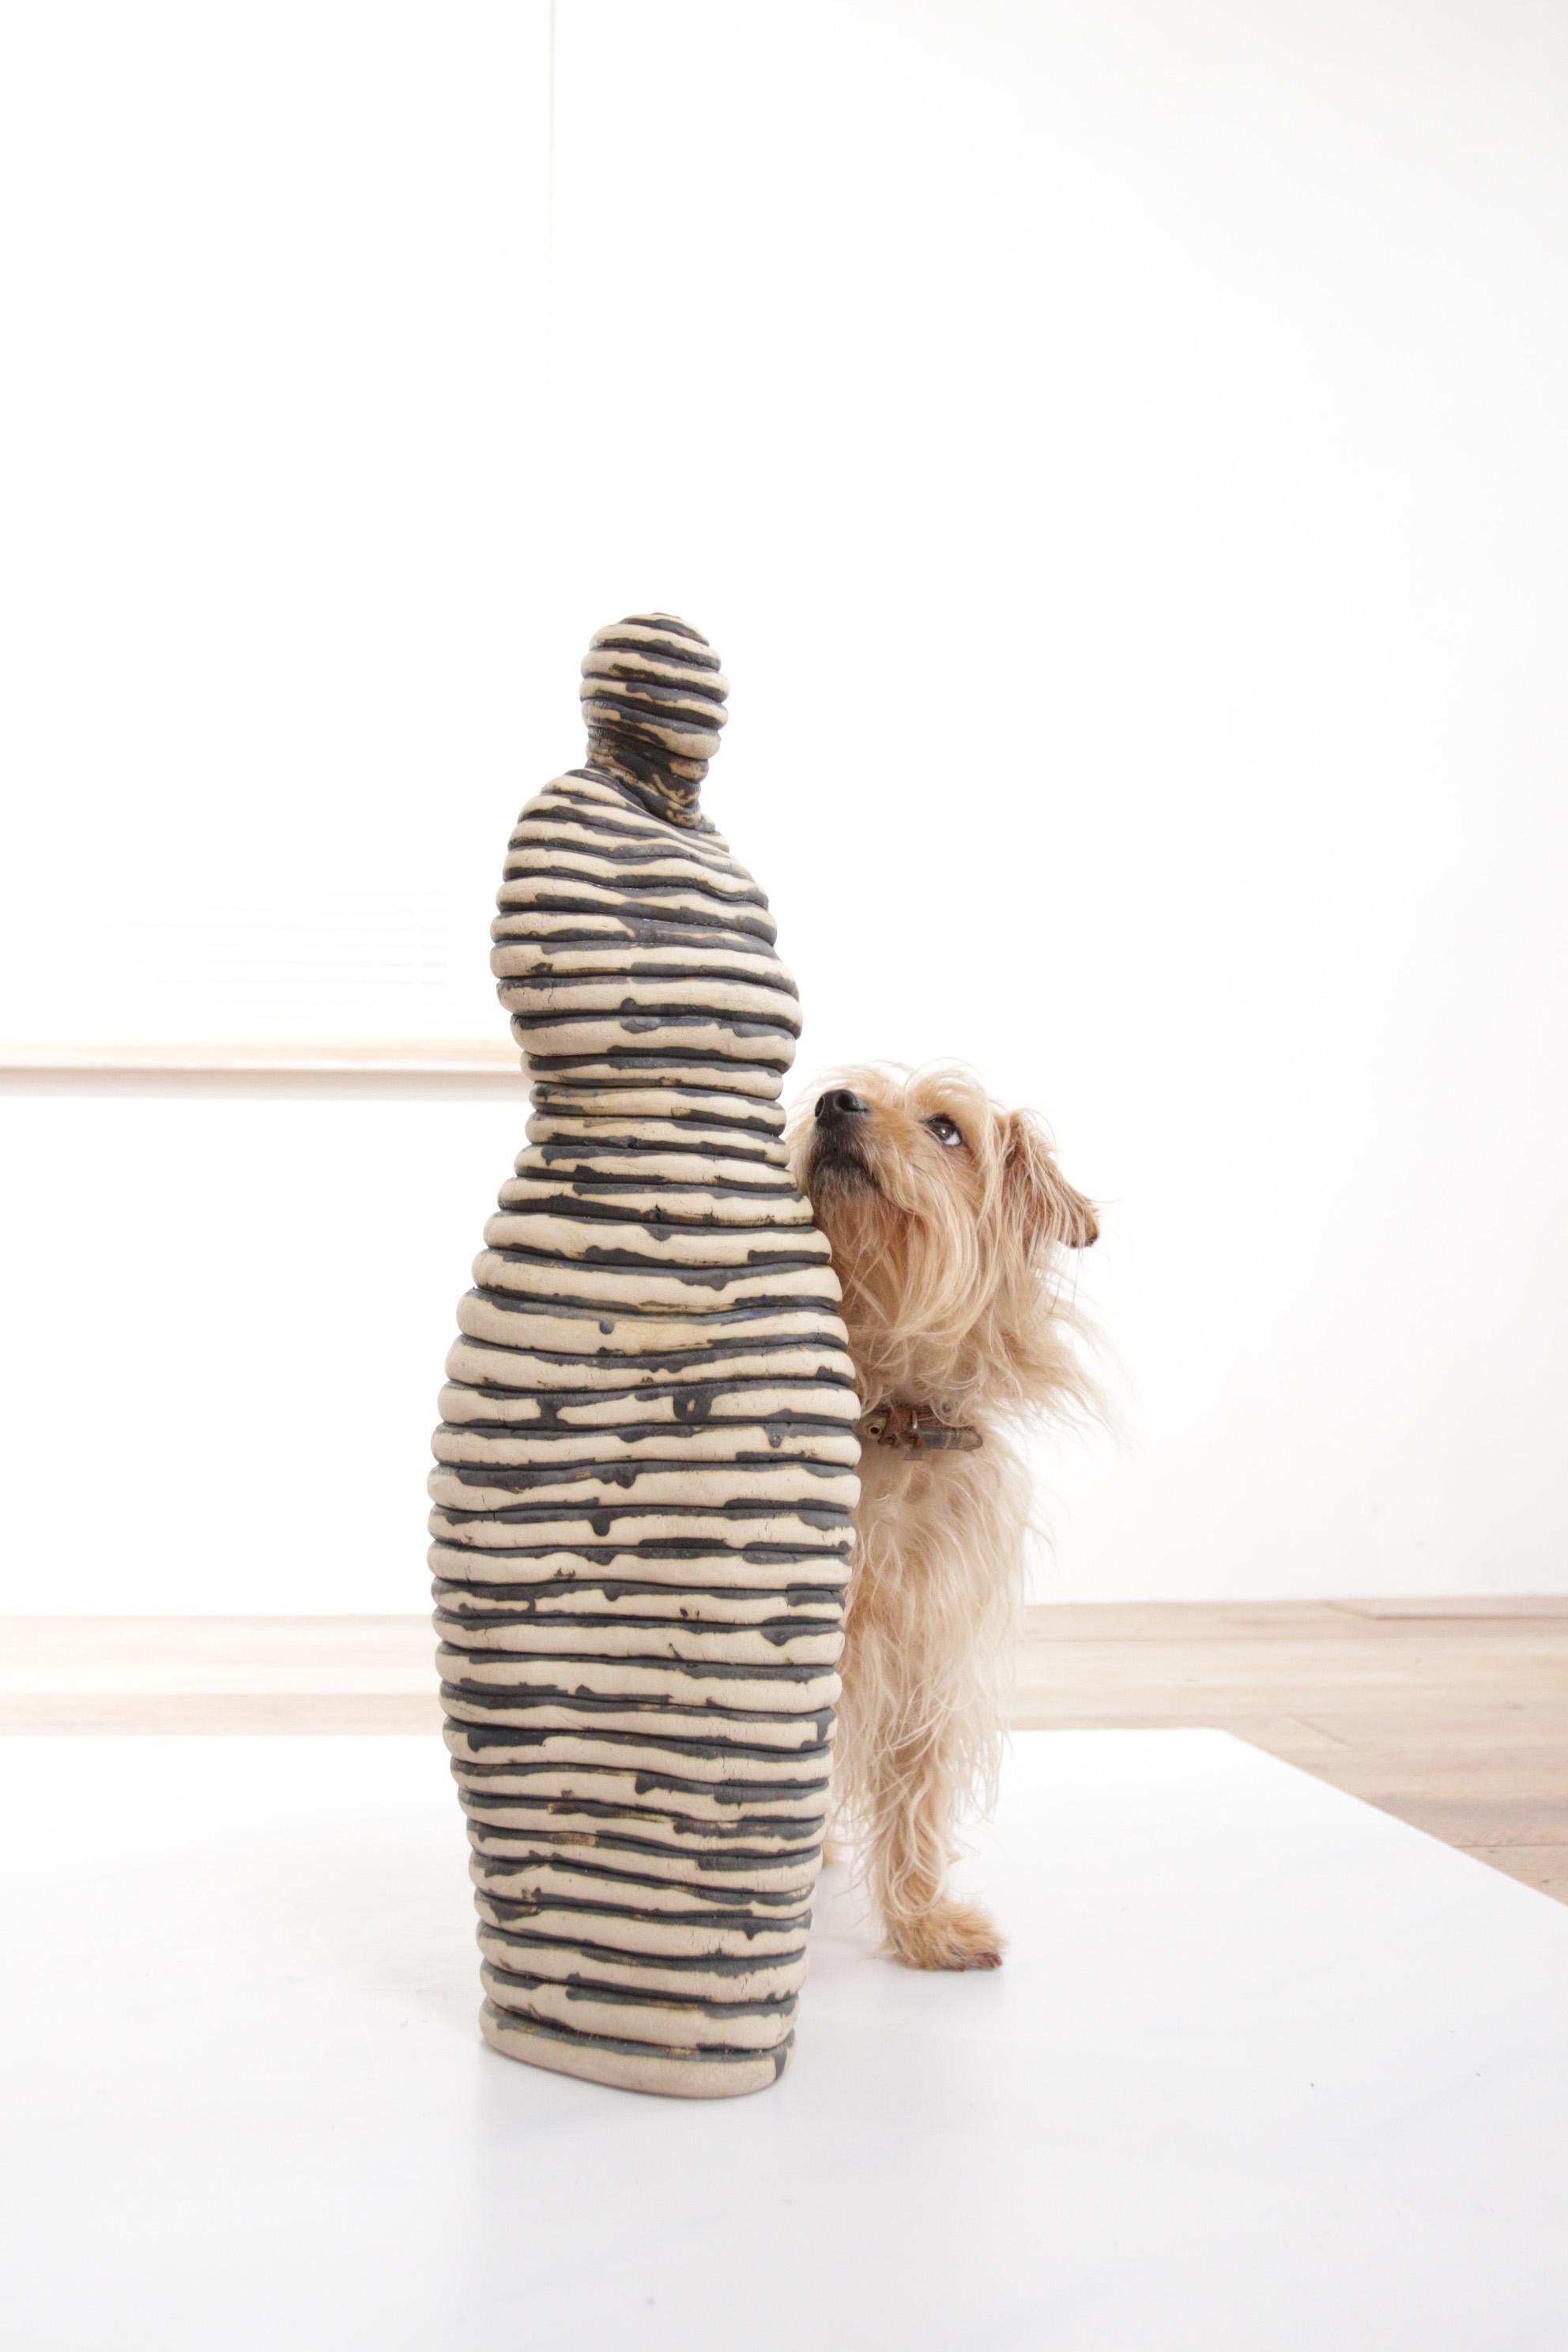 Andrea Dogterom Ceramic Sculpture Women in Stripes 2